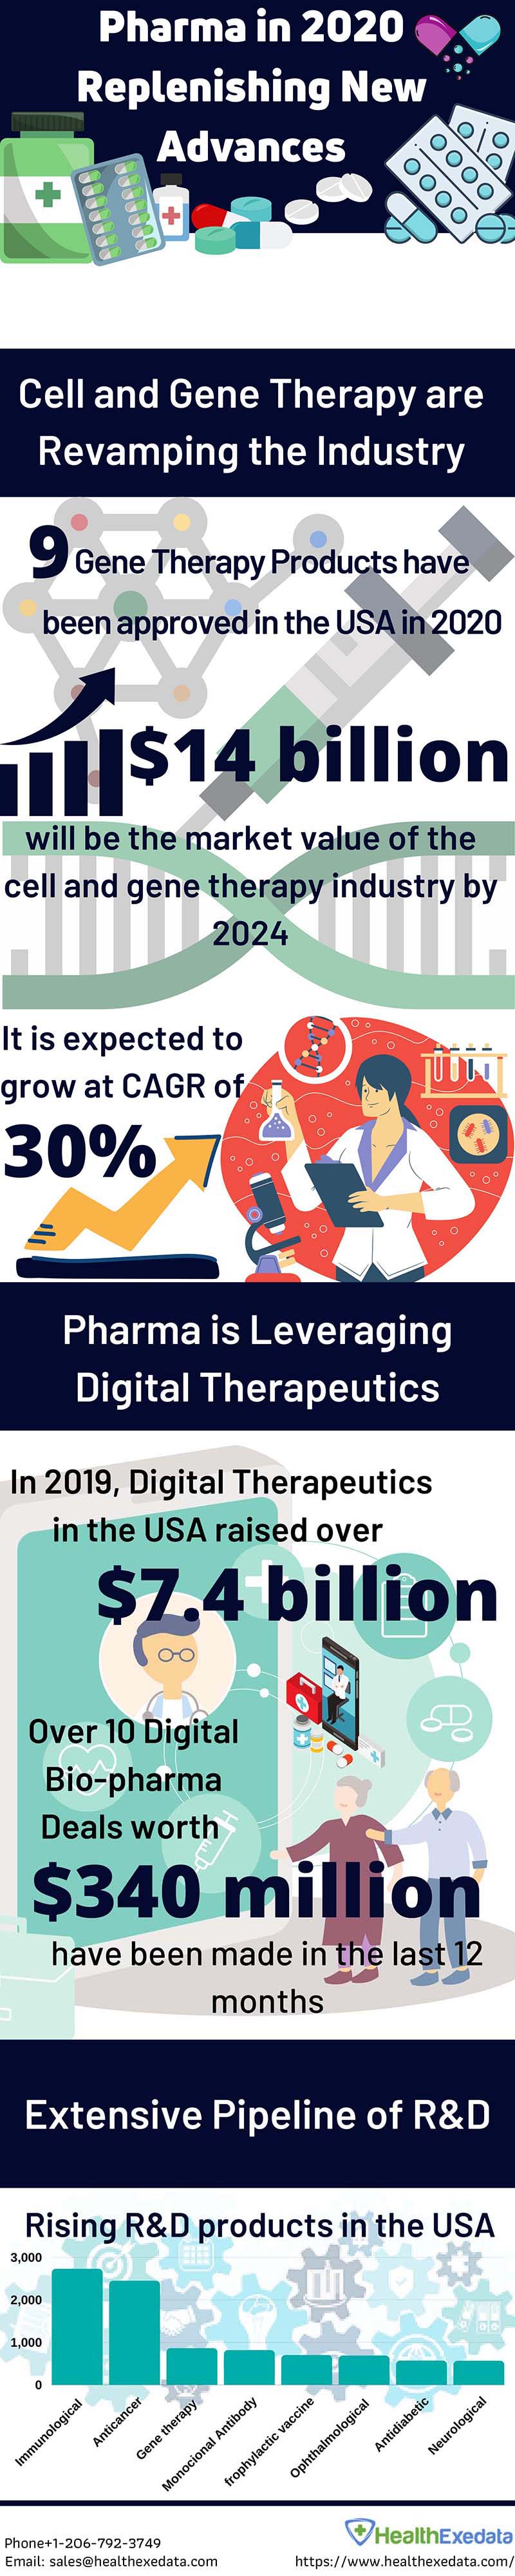 pharma-in-2020-replenishing-new-advances